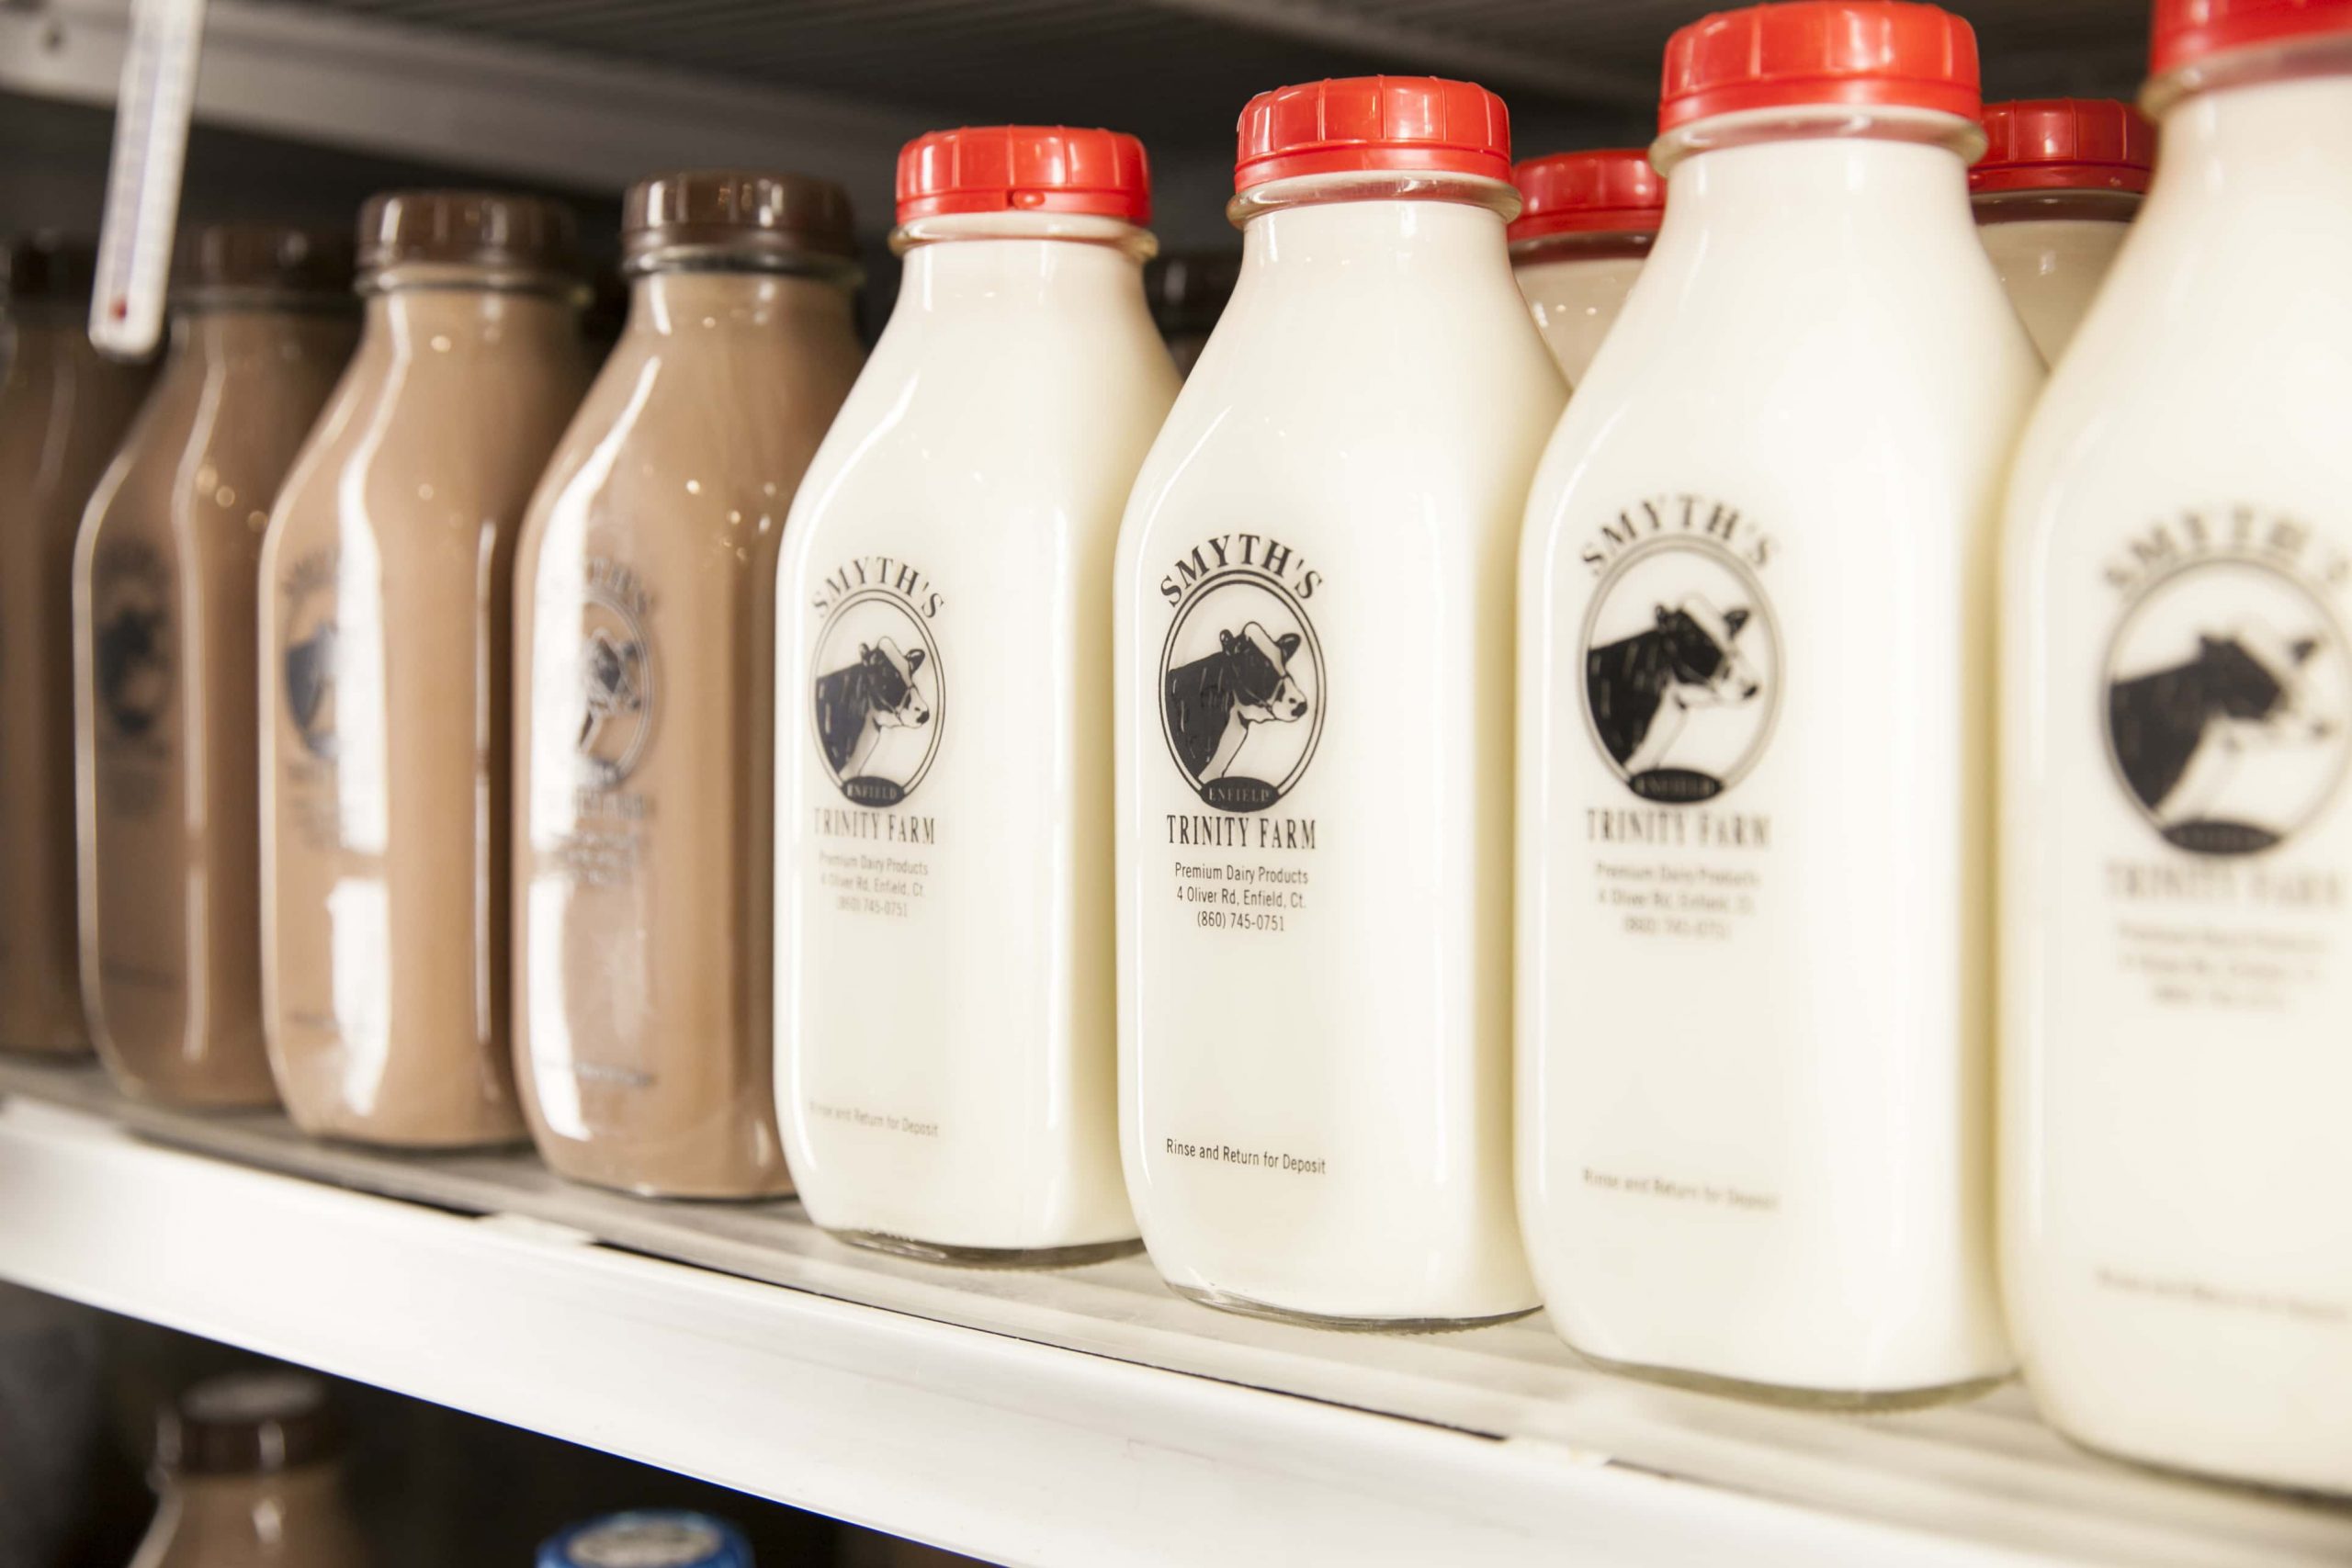 Smyth's farm milk and dairy products